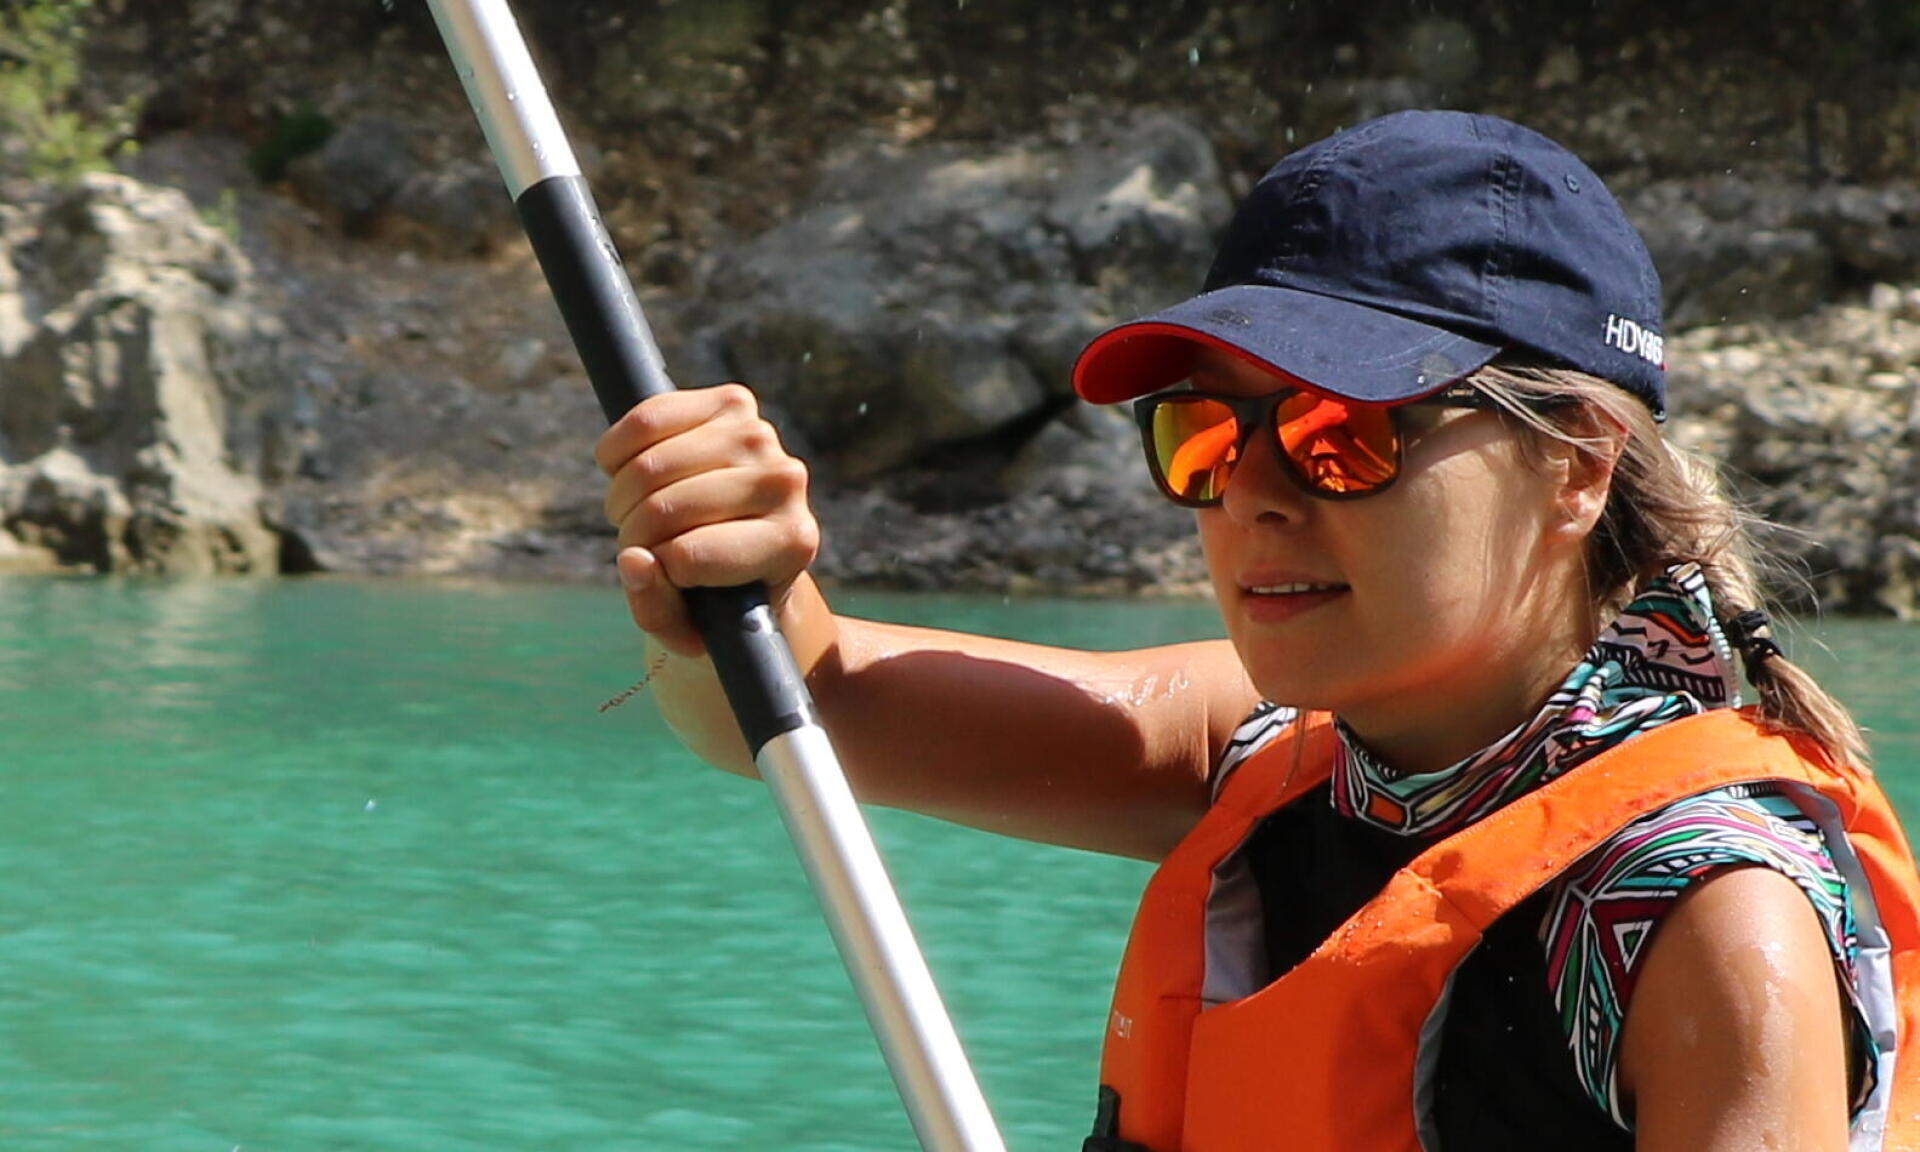 4 top kayaking spots in Hong Kong + Essential gear list!